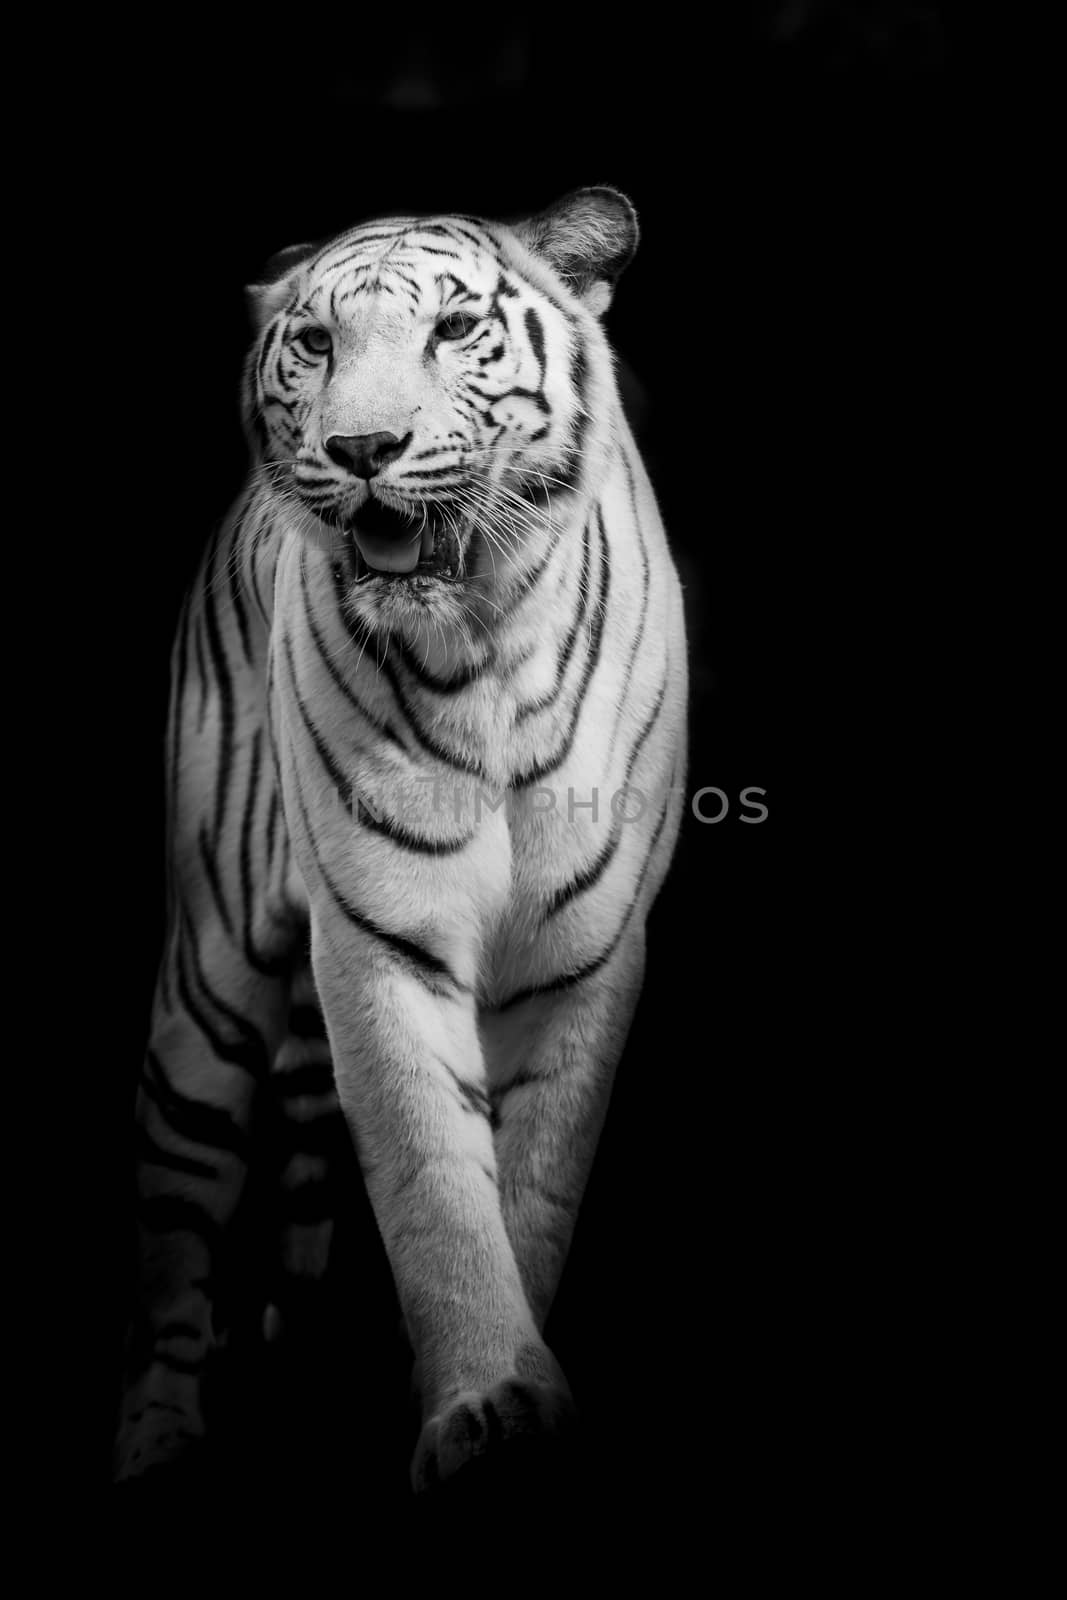 White tiger walking isolated on black background